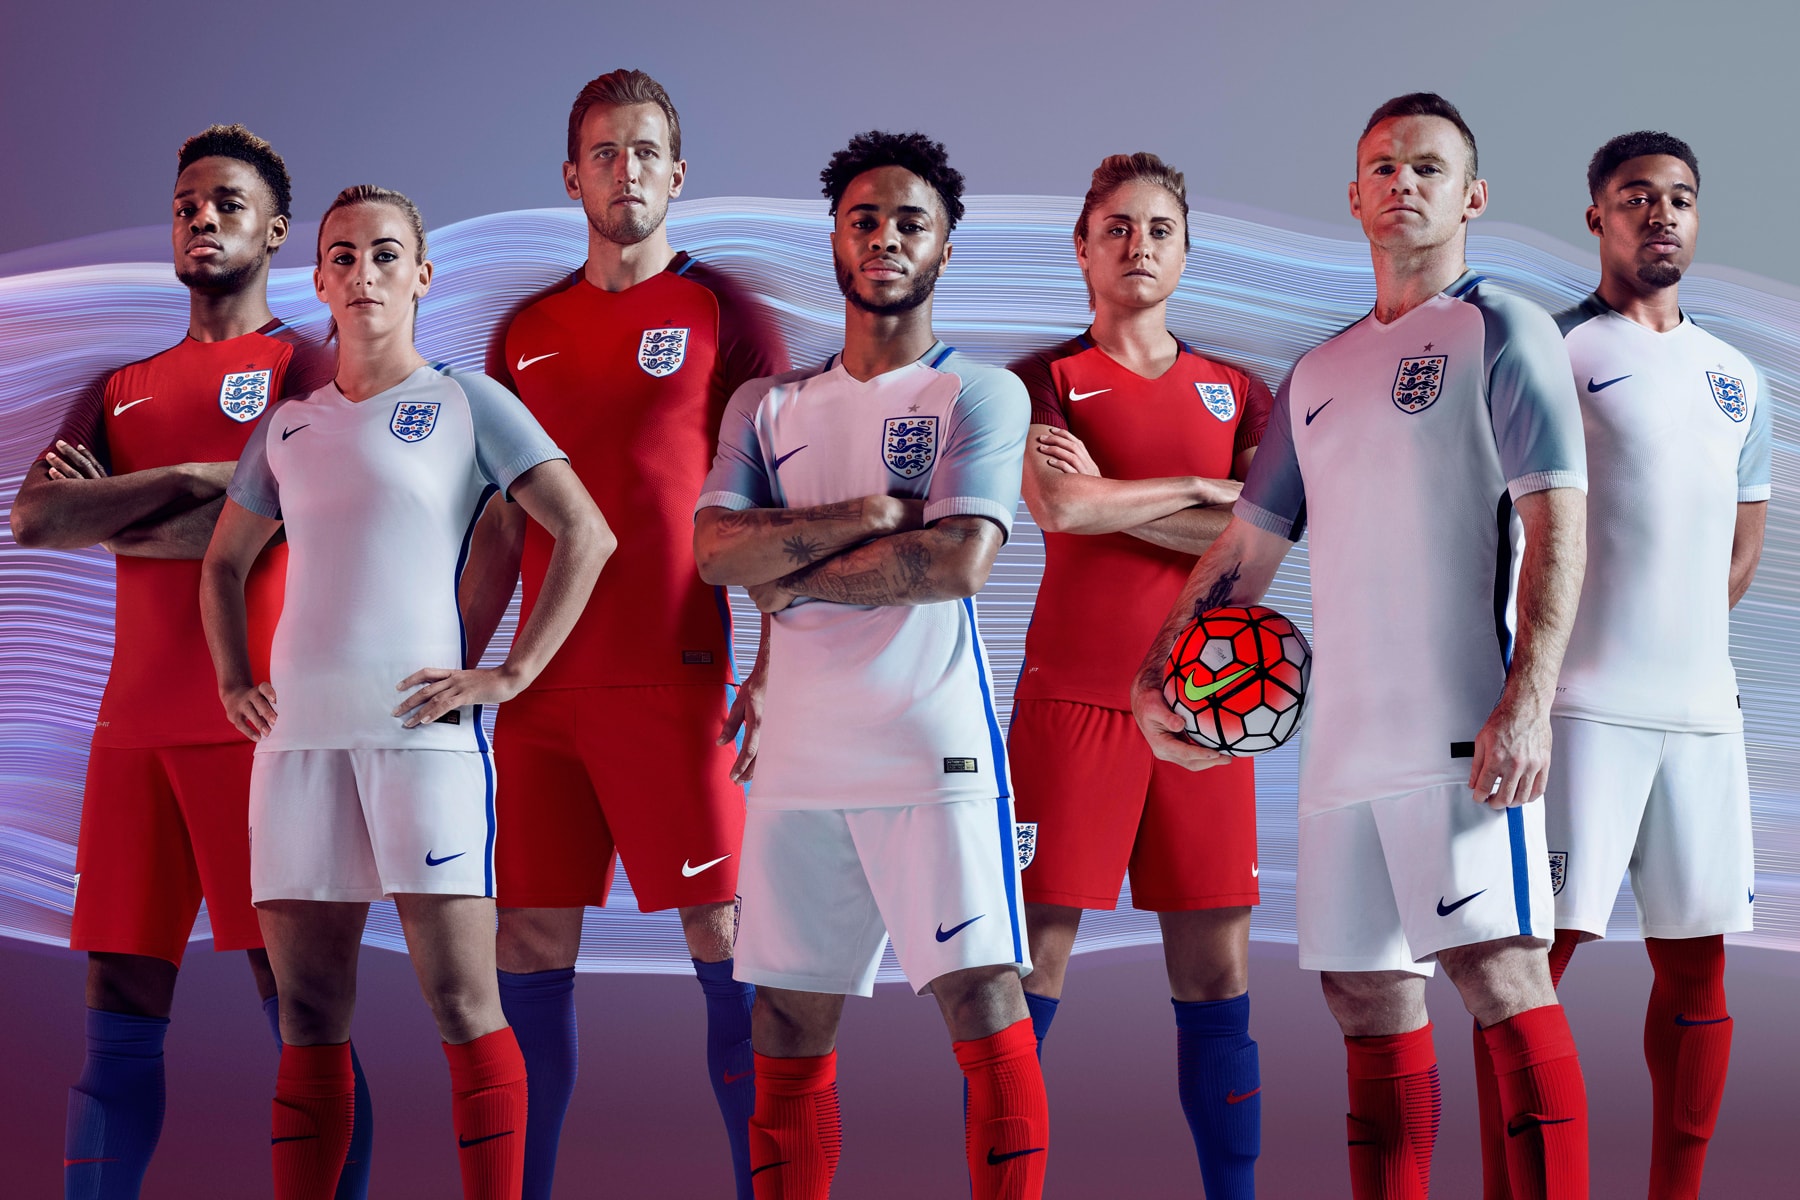 Football Association Nike Contract Extension 2016 english england nation team soccer kits jerseys 2030